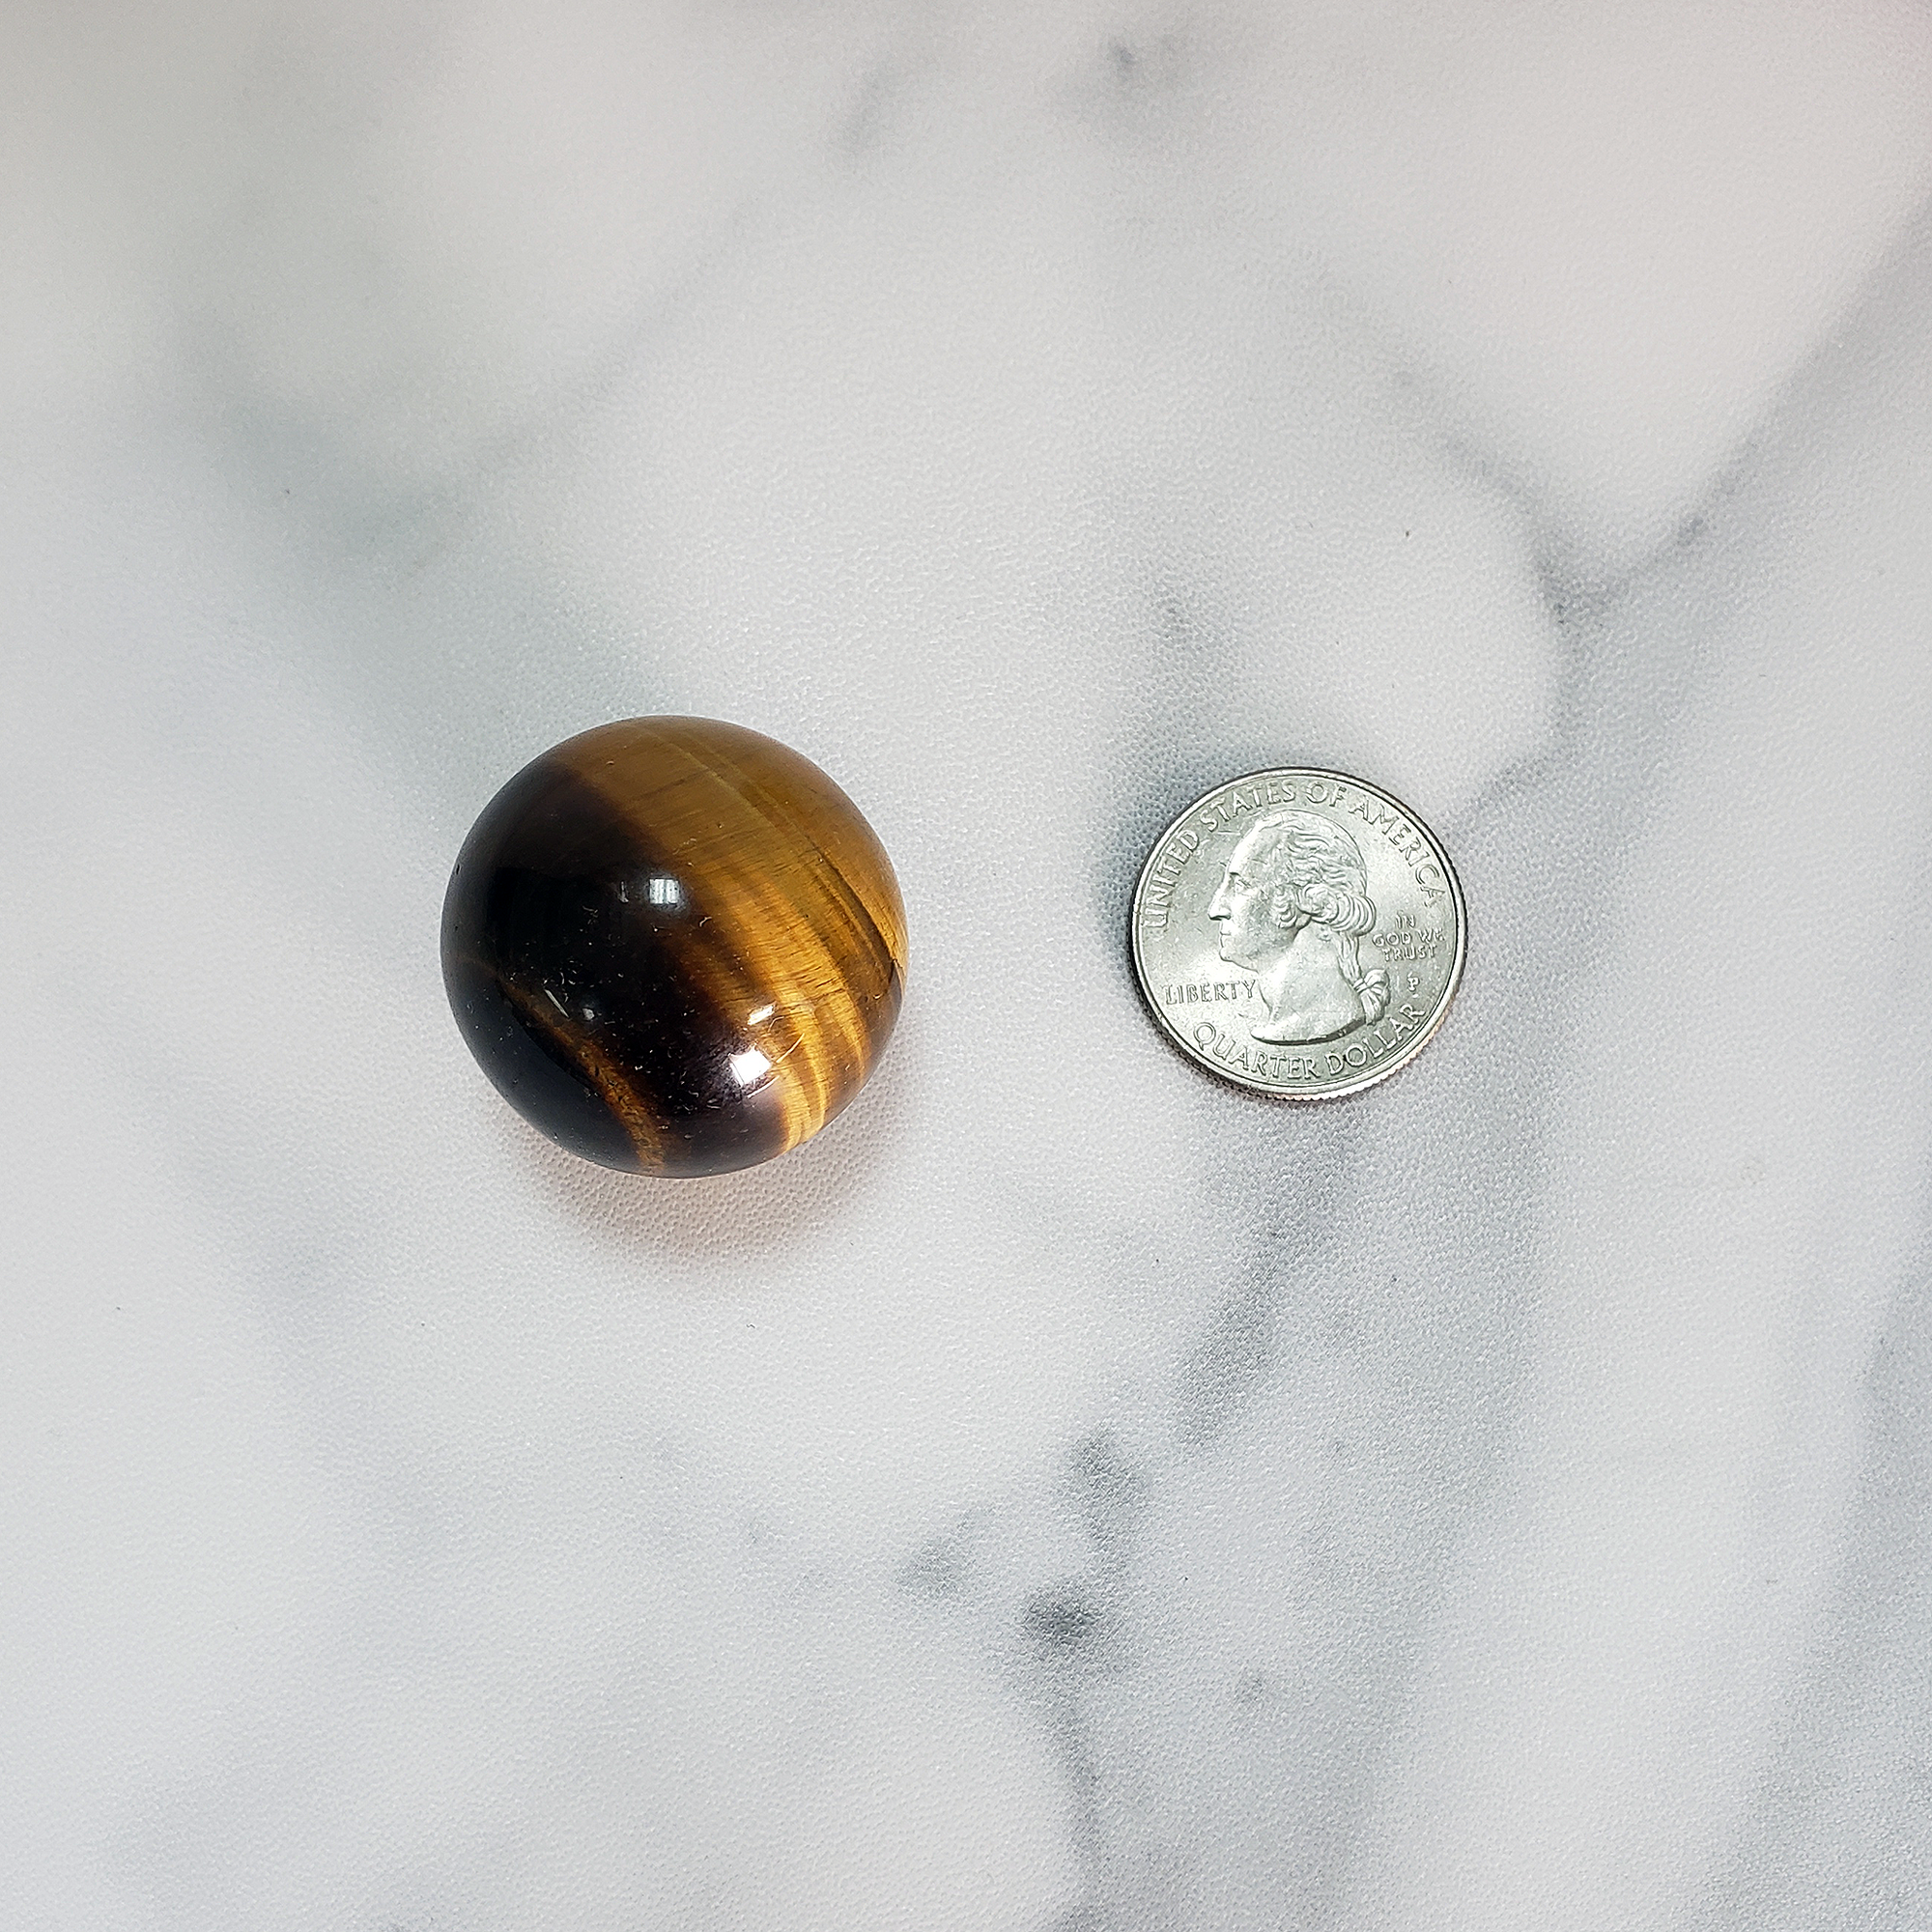 Tigers Eye Natural Crystal Sphere Gemstone Orb - One 30mm Sphere - Size Comparison